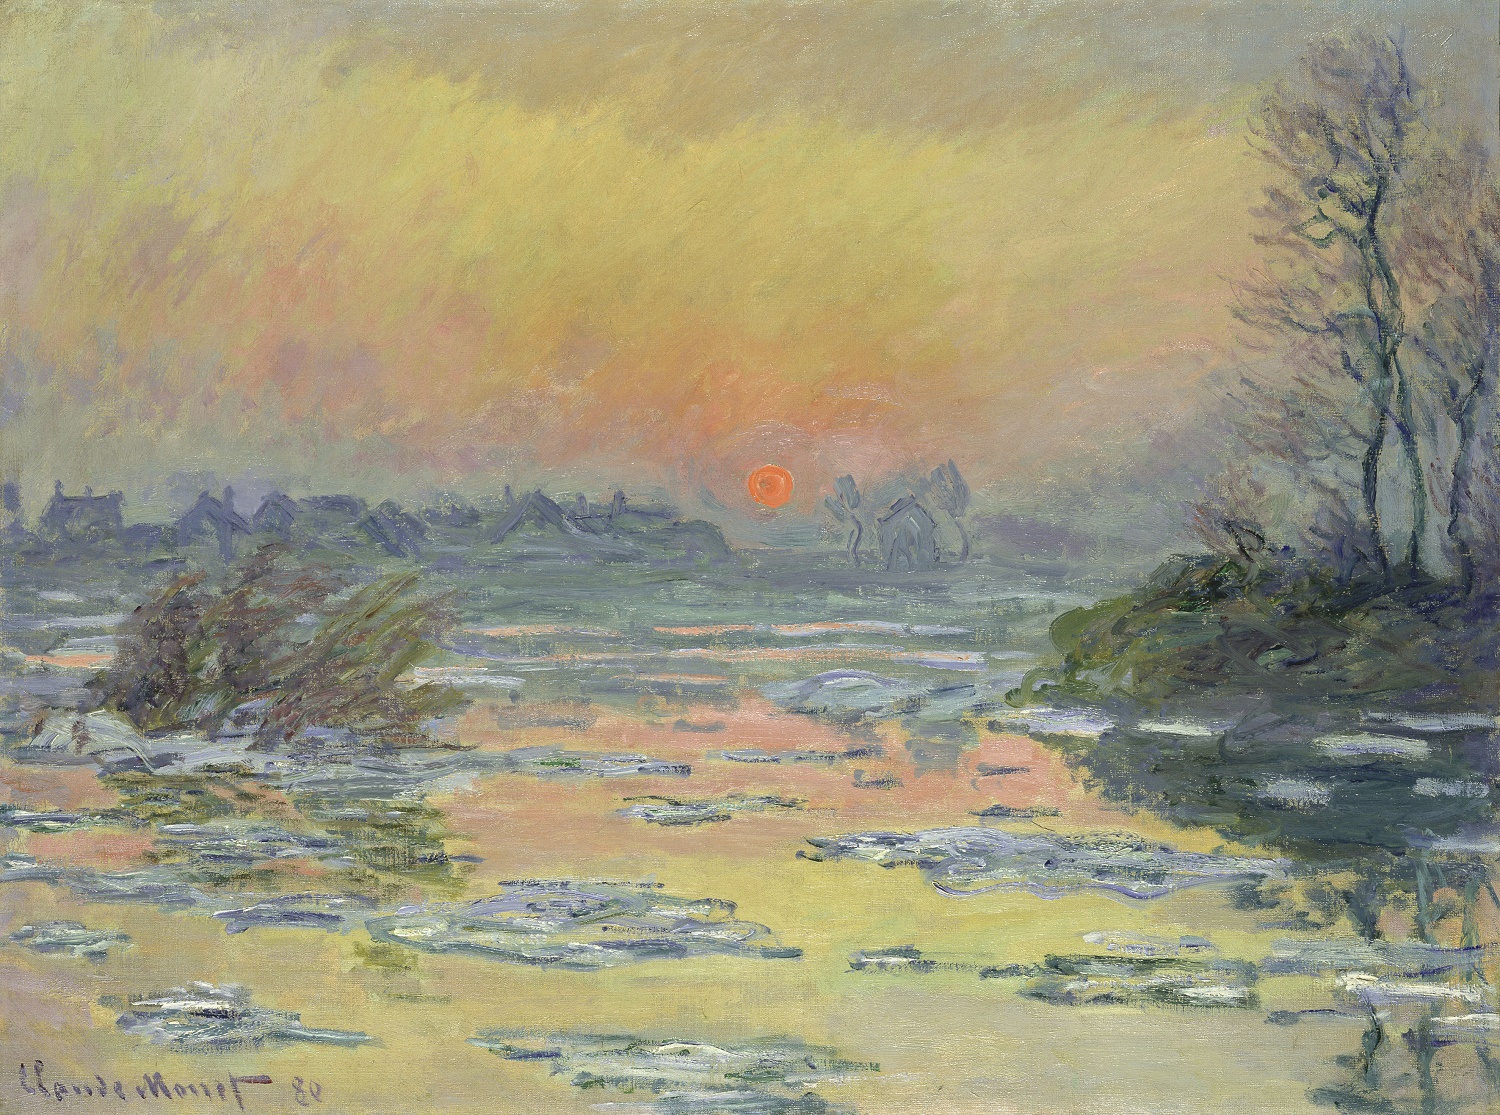 Claude+Monet-1840-1926 (845).jpg